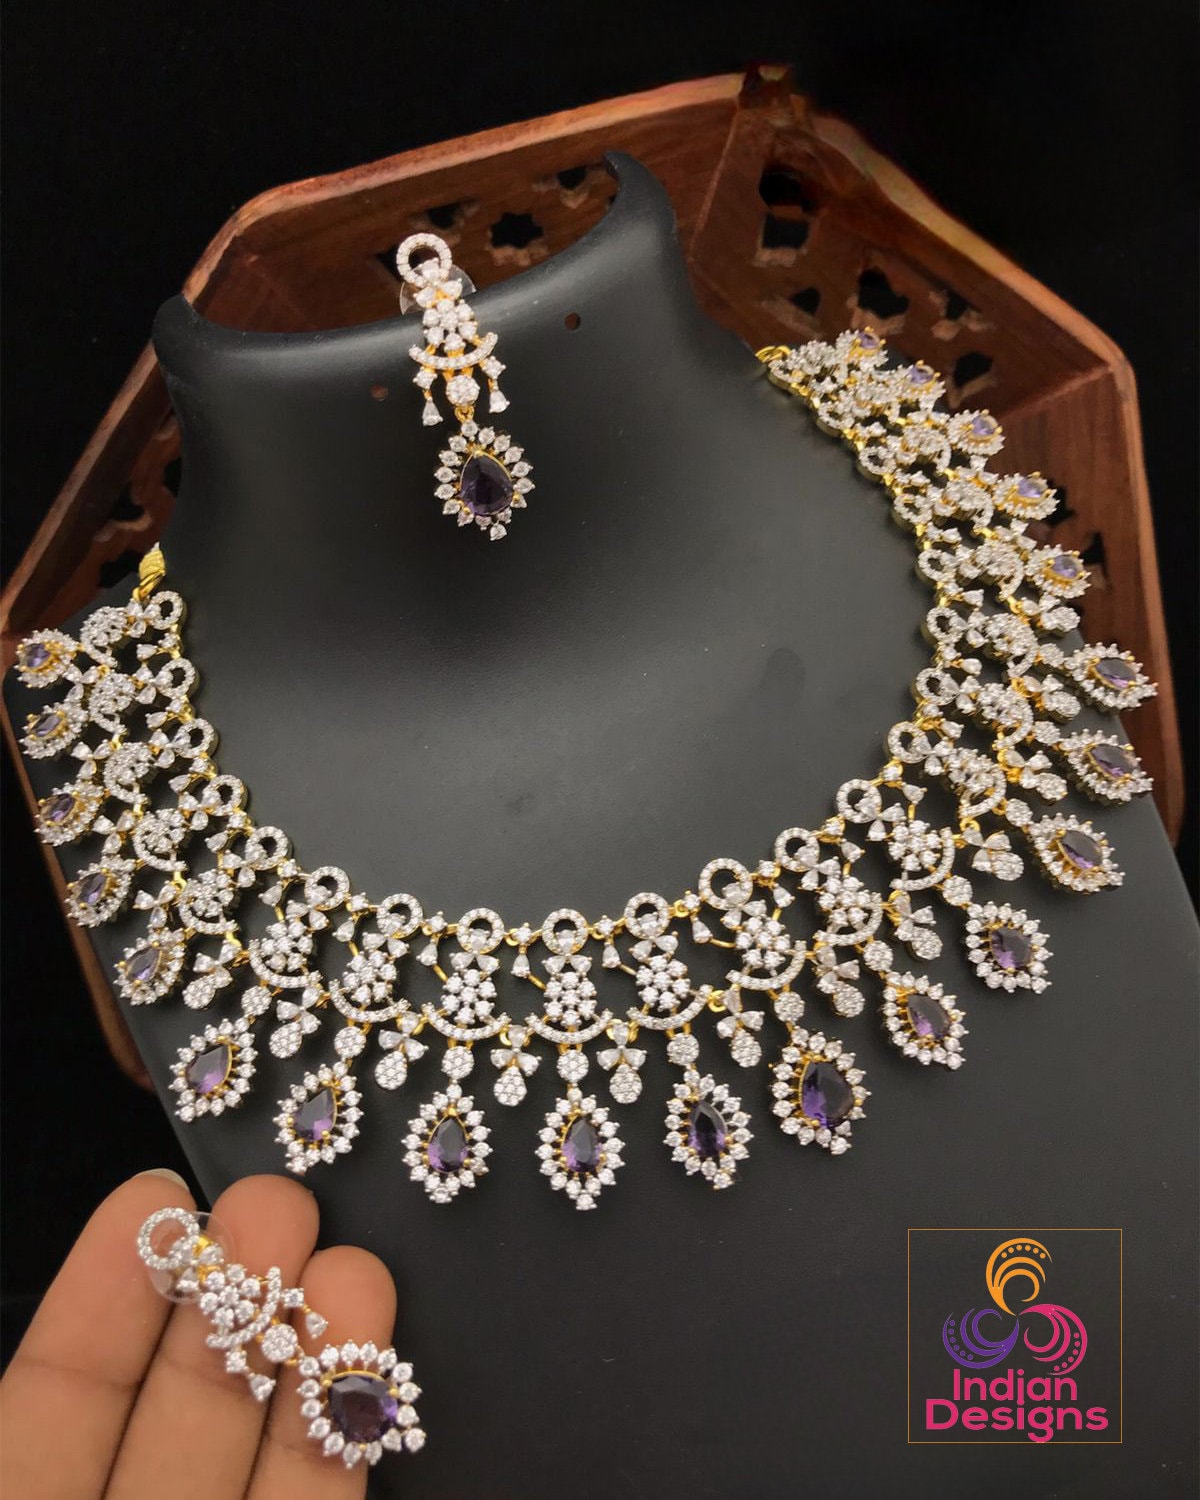 Exclusive American Diamond Indian Wedding Jewelry Gold Choker set|Bollywood style Bridal necklace sets|Pakistani wedding jewelry|Gift forher